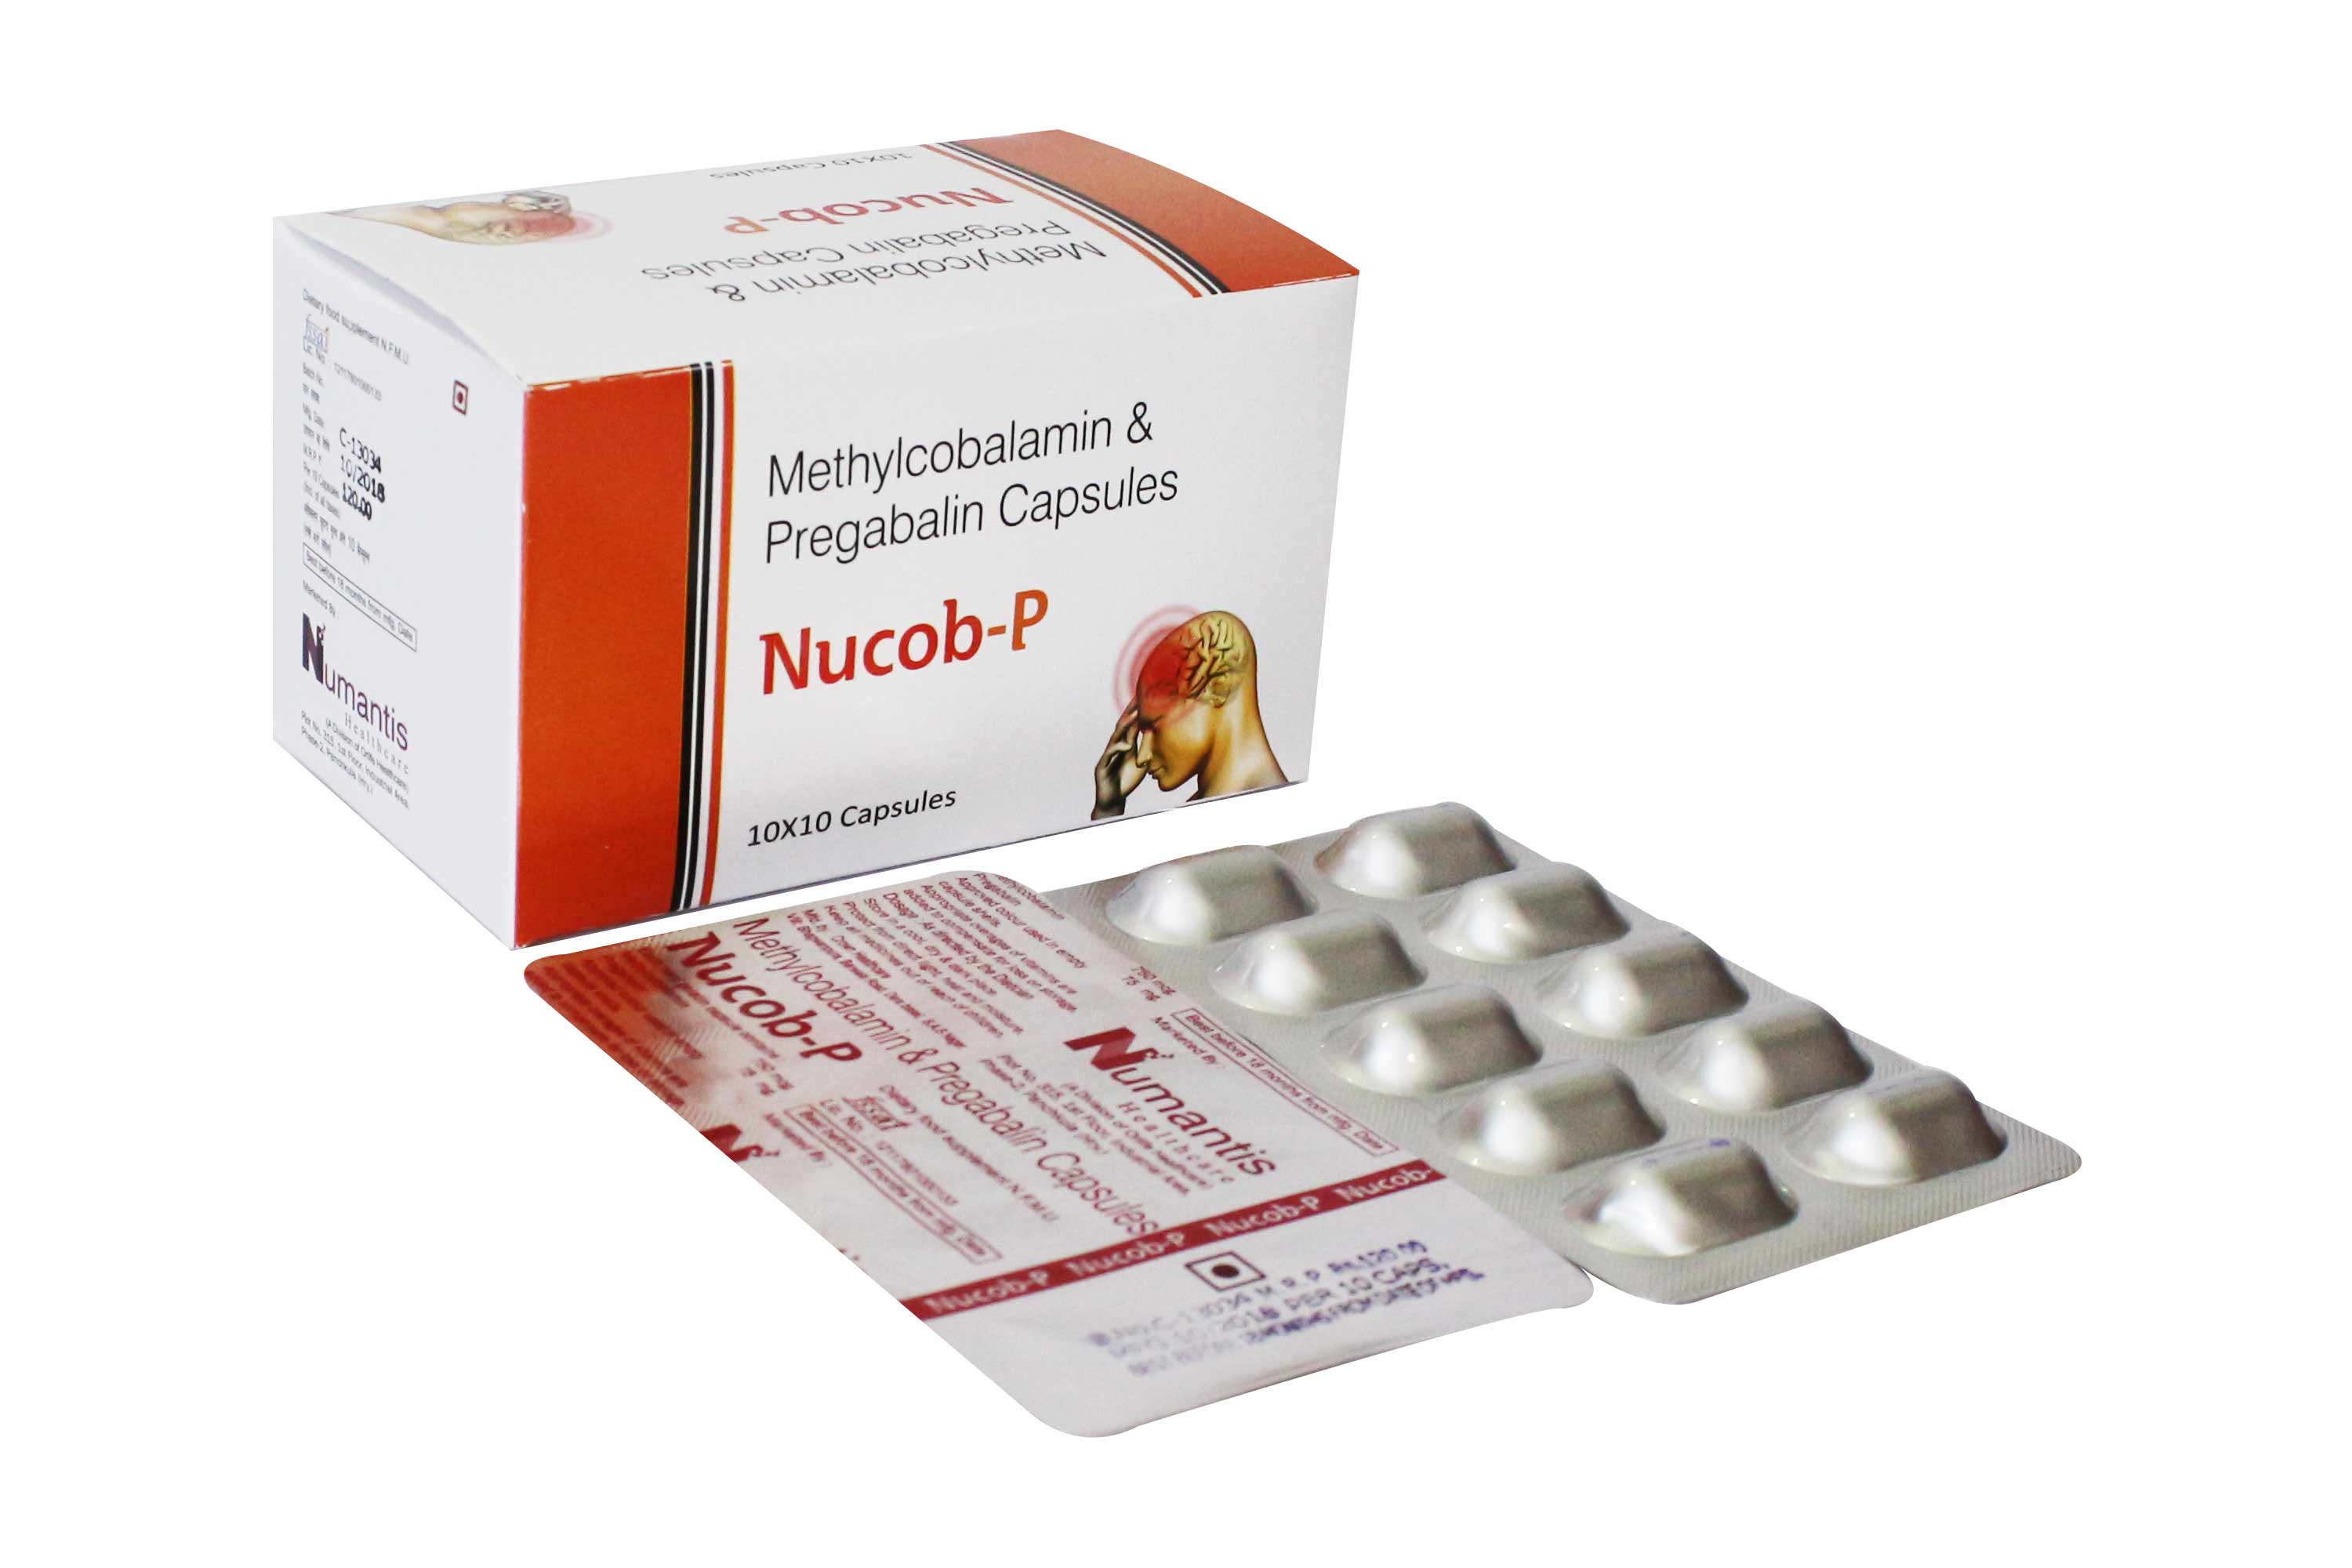 Product Name: Nucob P, Compositions of Nucob P are Methylcobalamin & Pregabalin Capsules - Numantis Healthcare